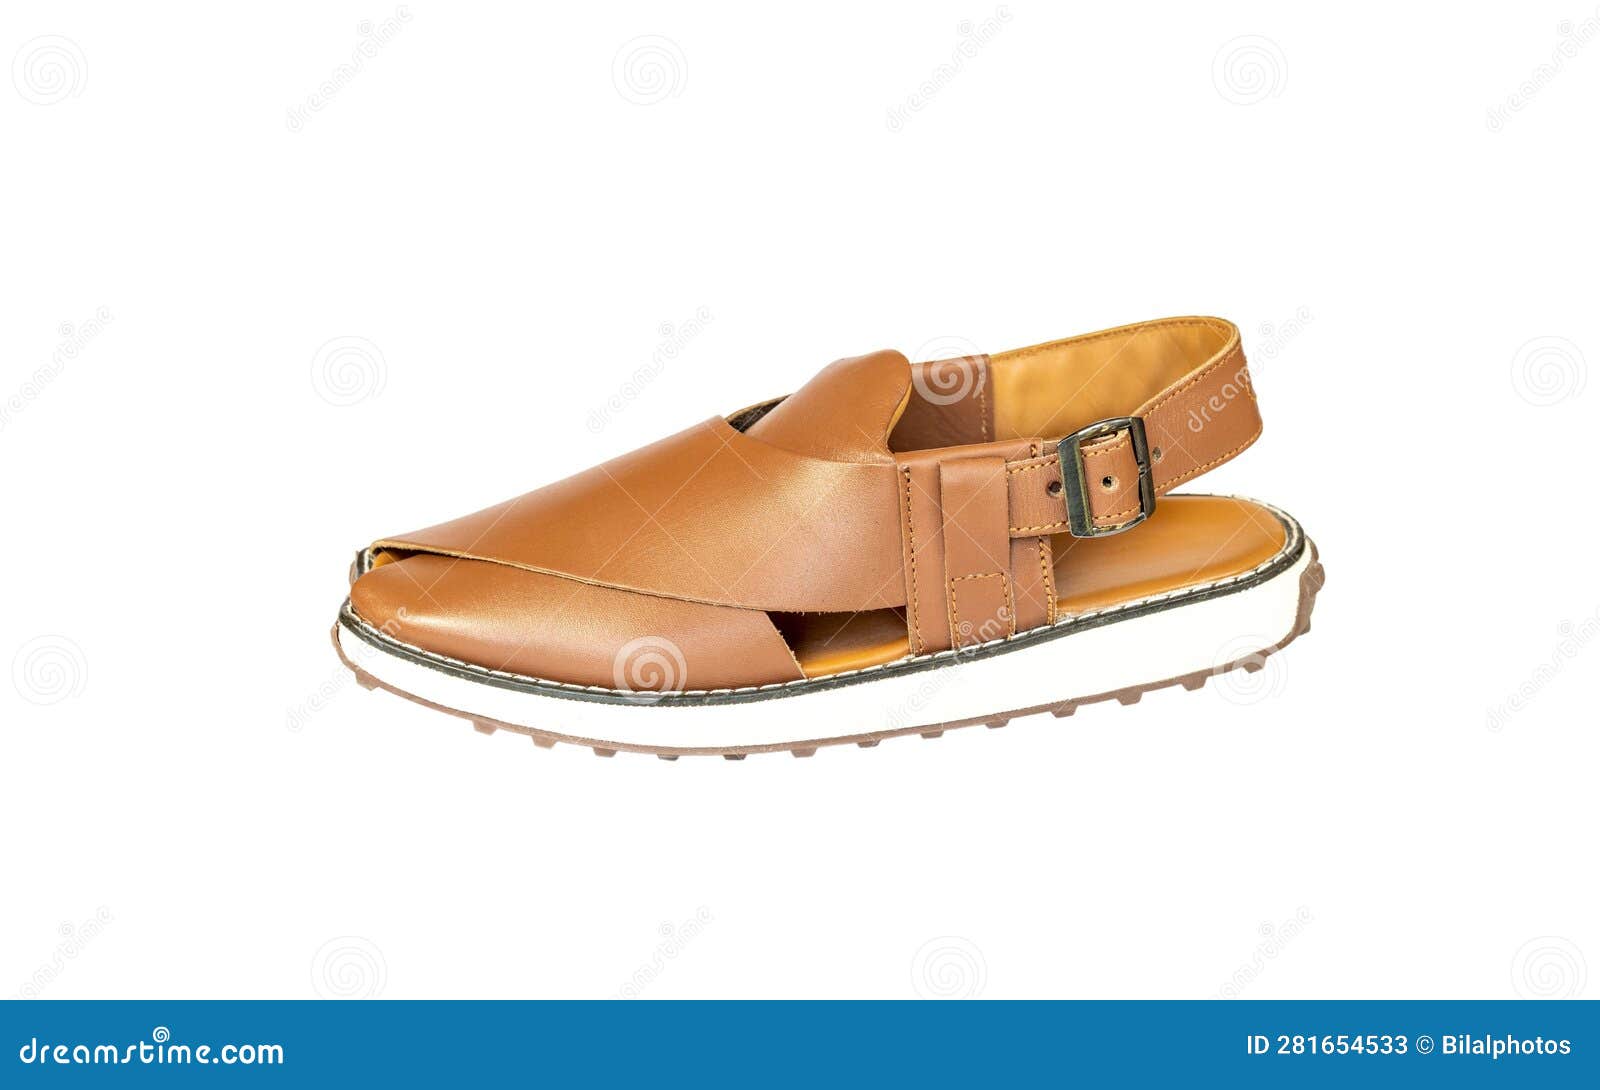 peshawari tsaplay a traditional footwear worn in summer